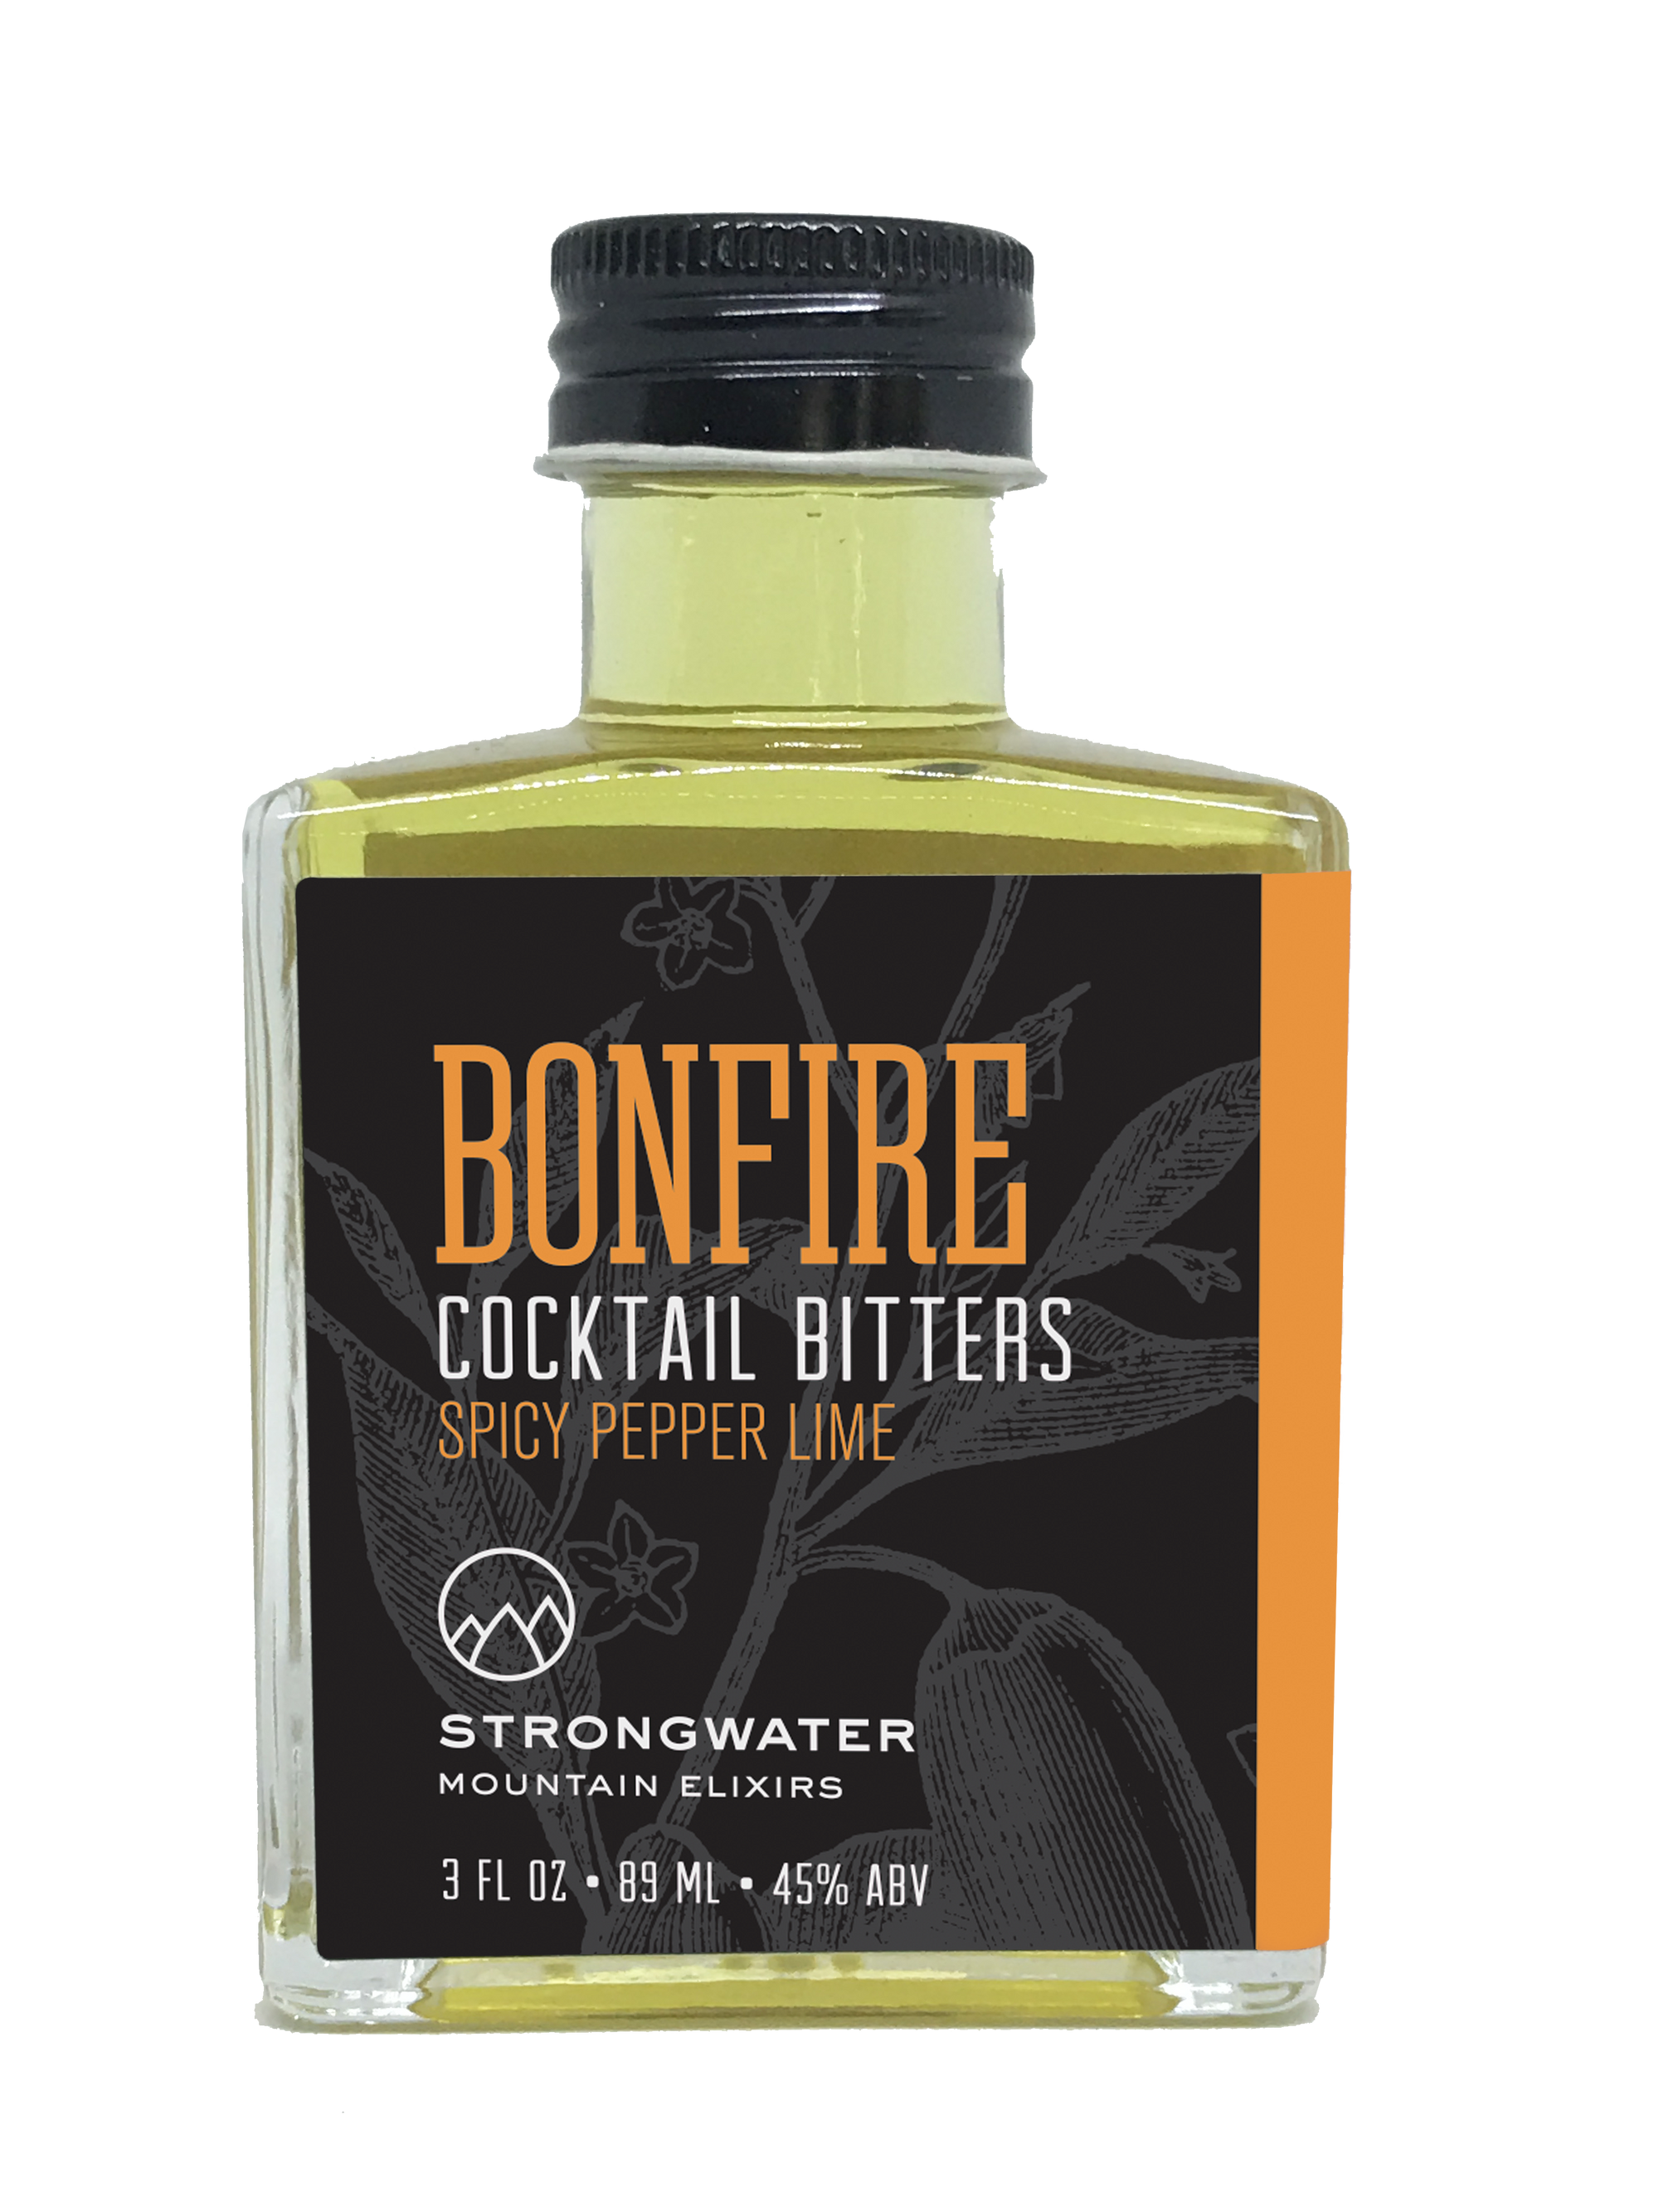 Bonfire Spicy Bitters